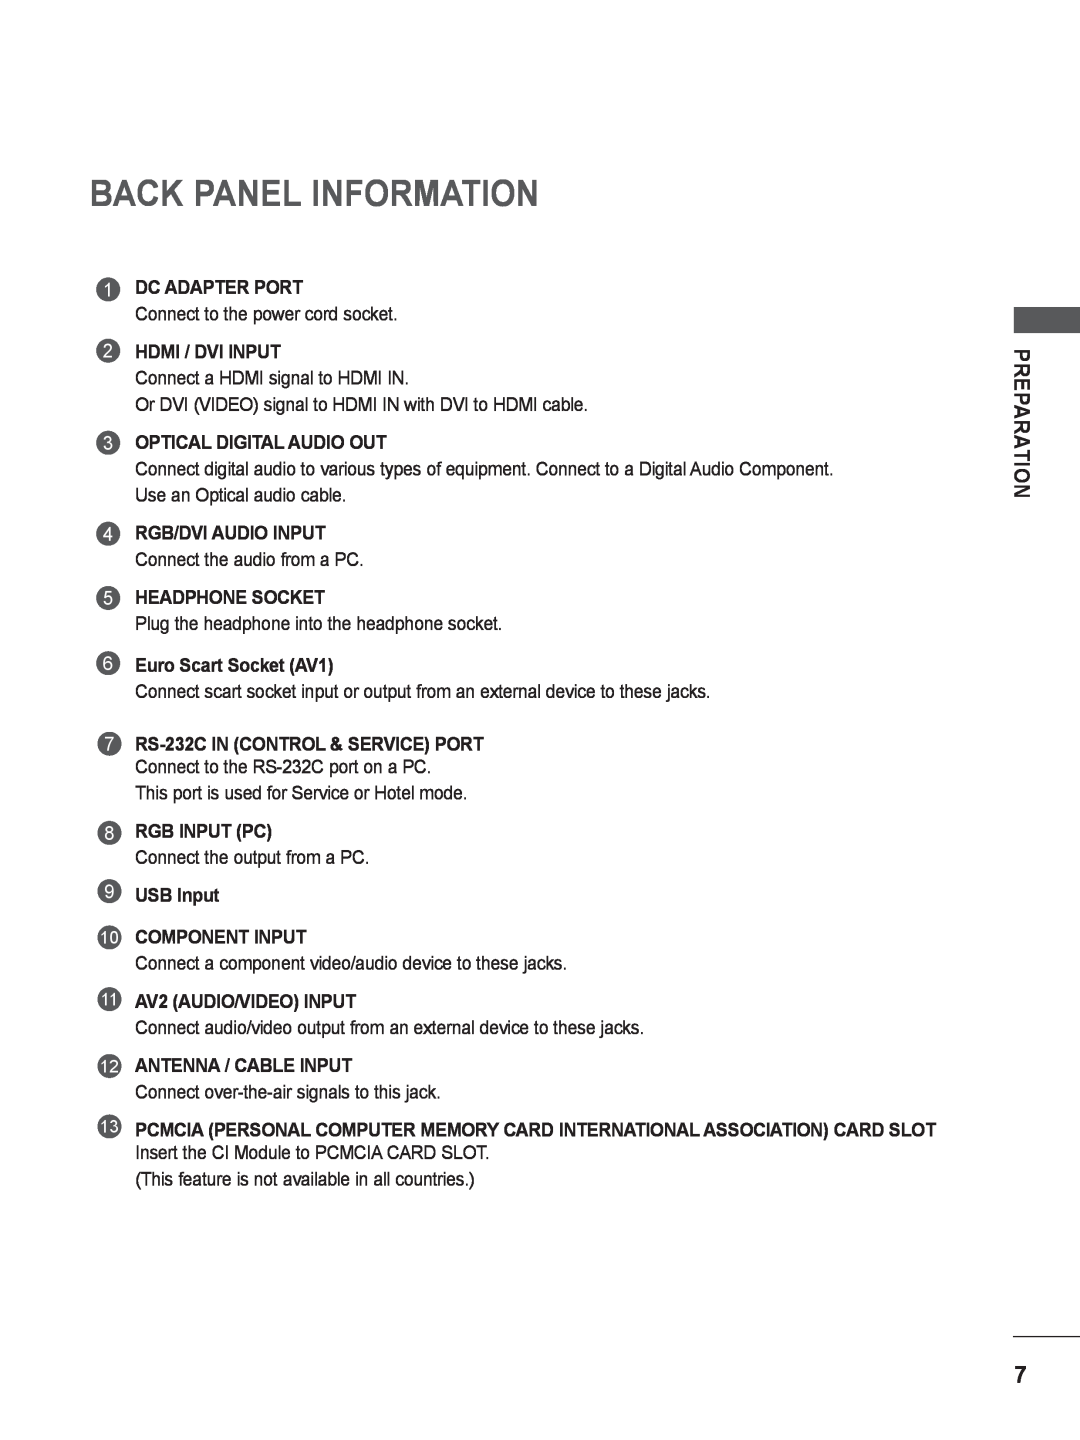 LG Electronics M2280D Back Panel Information, Dc Adapter Port, Hdmi / Dvi Input, Optical Digital Audio Out, Rgb Input Pc 